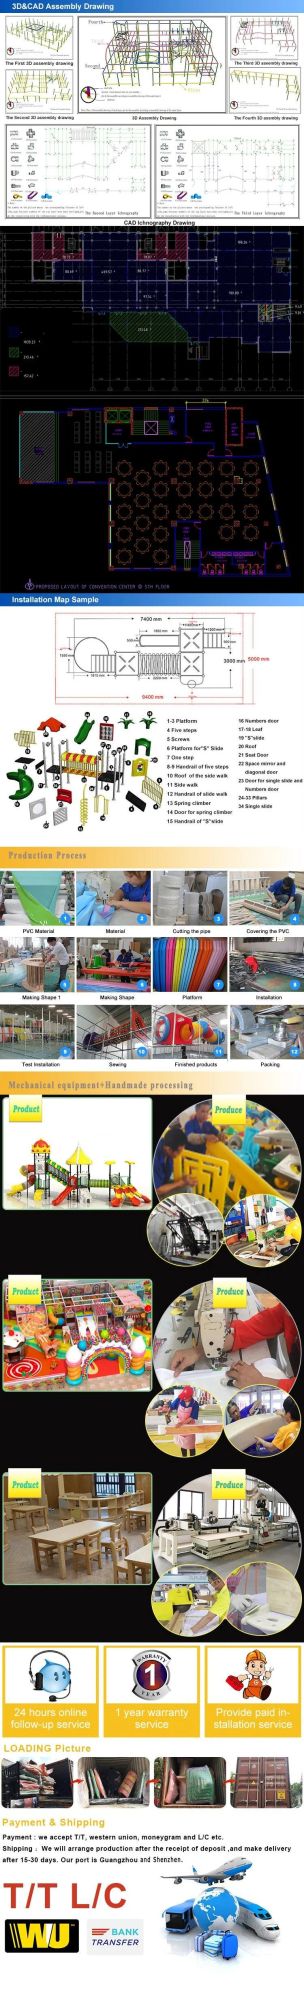 S027 ISO Certificate Plastic Outdoor Playground Equipment Slide